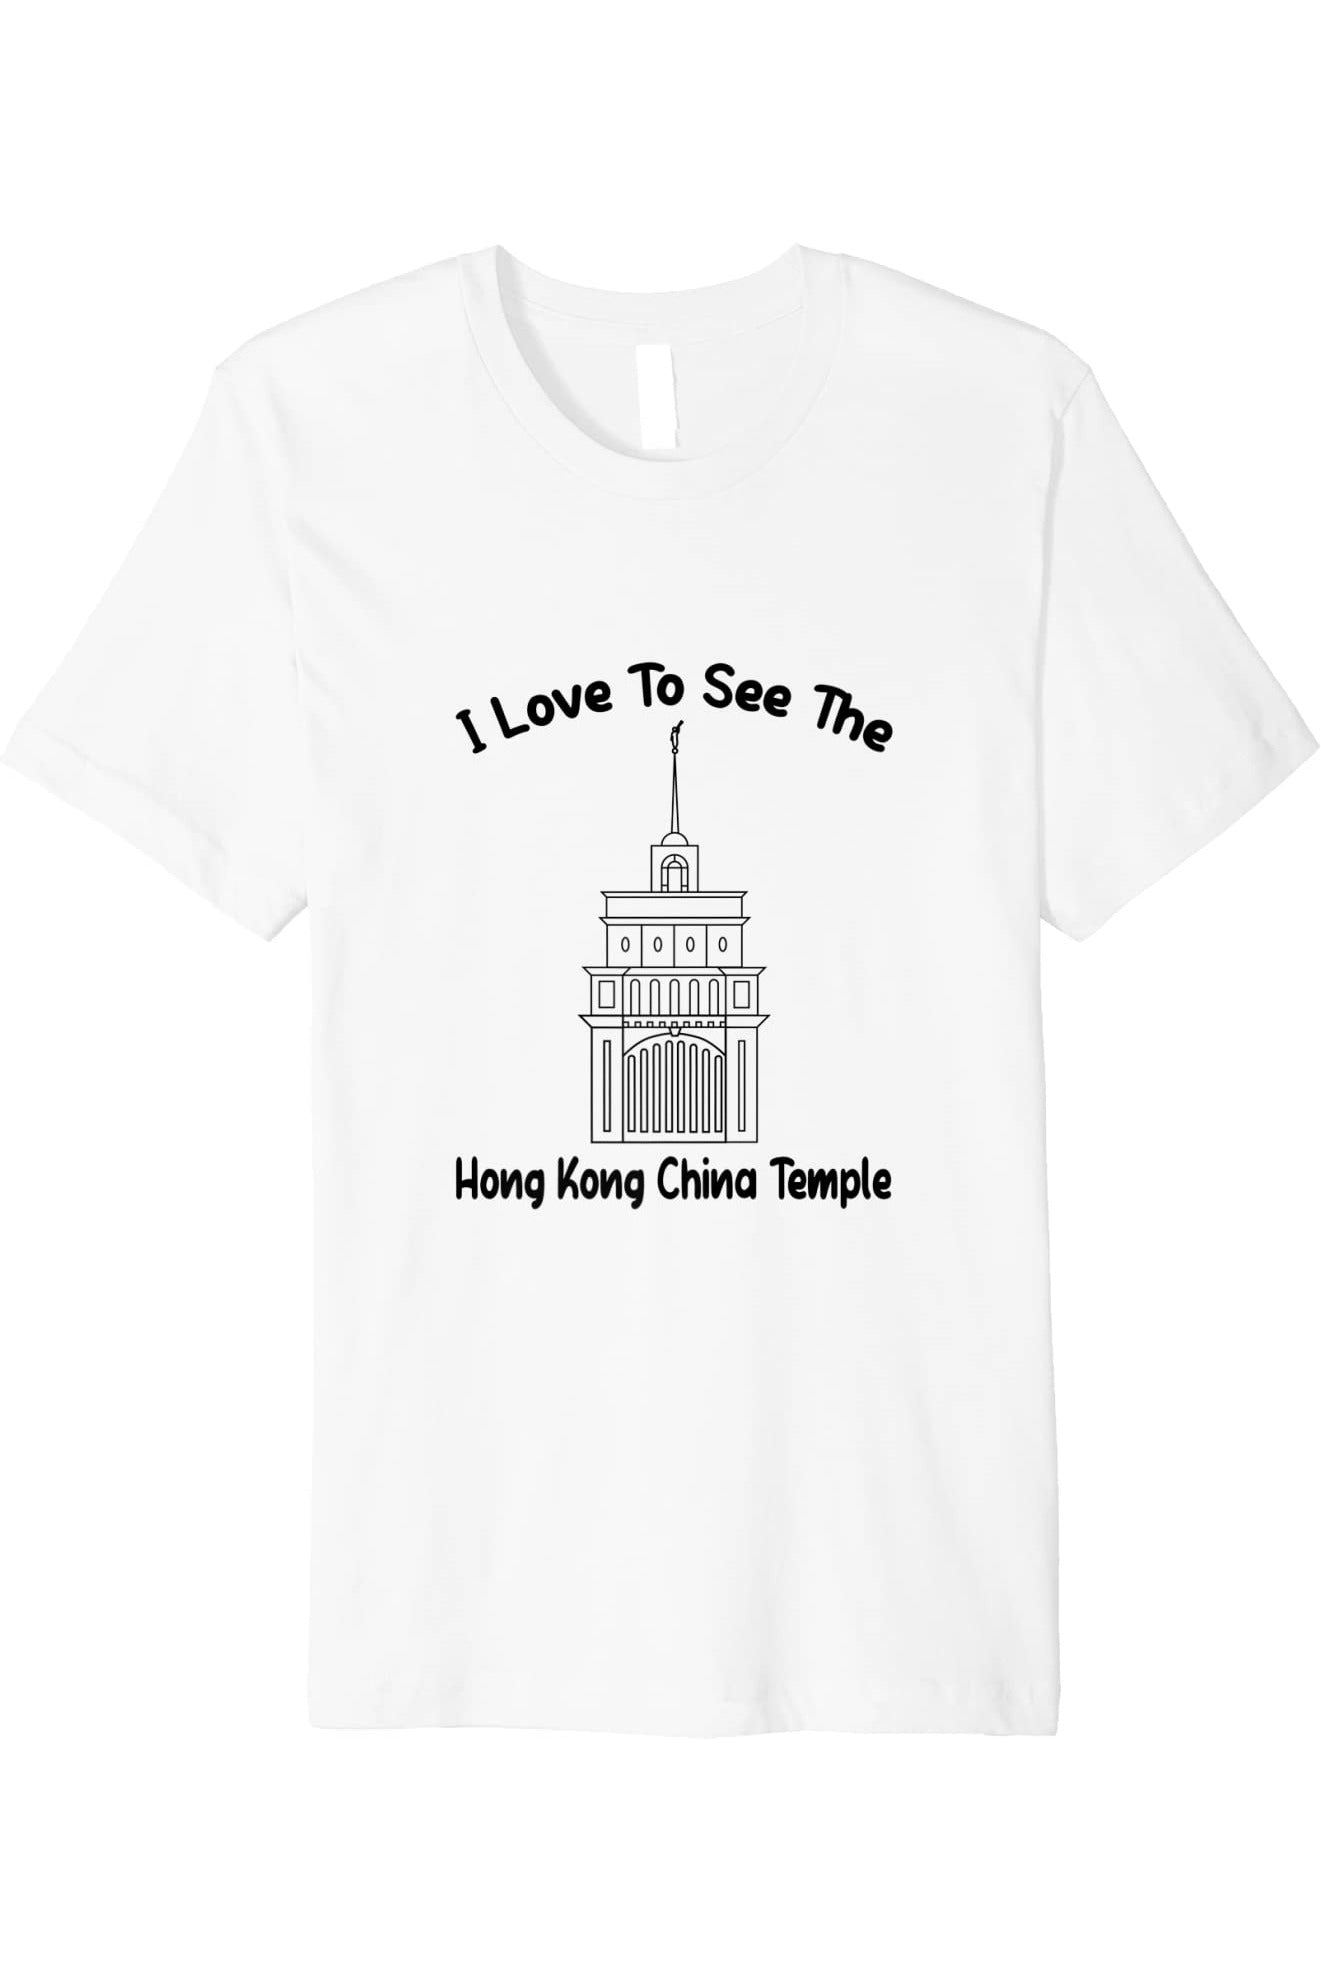 Hong Kong China Temple T-Shirt - Premium - Primary Style (English) US